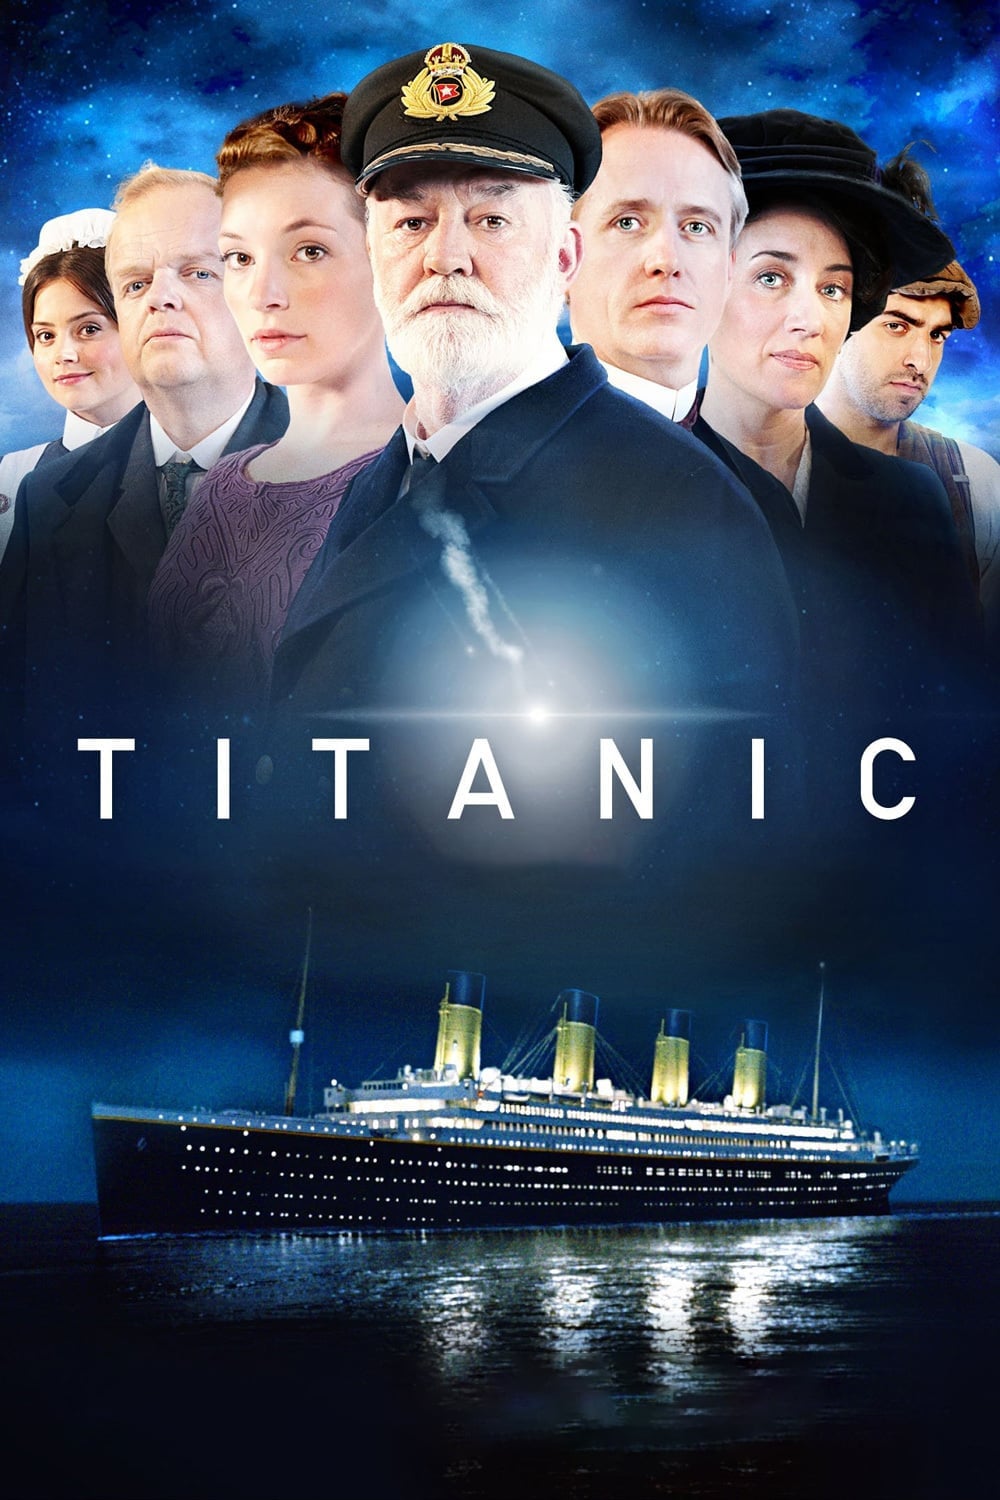 Titanic TV Shows About Titanic